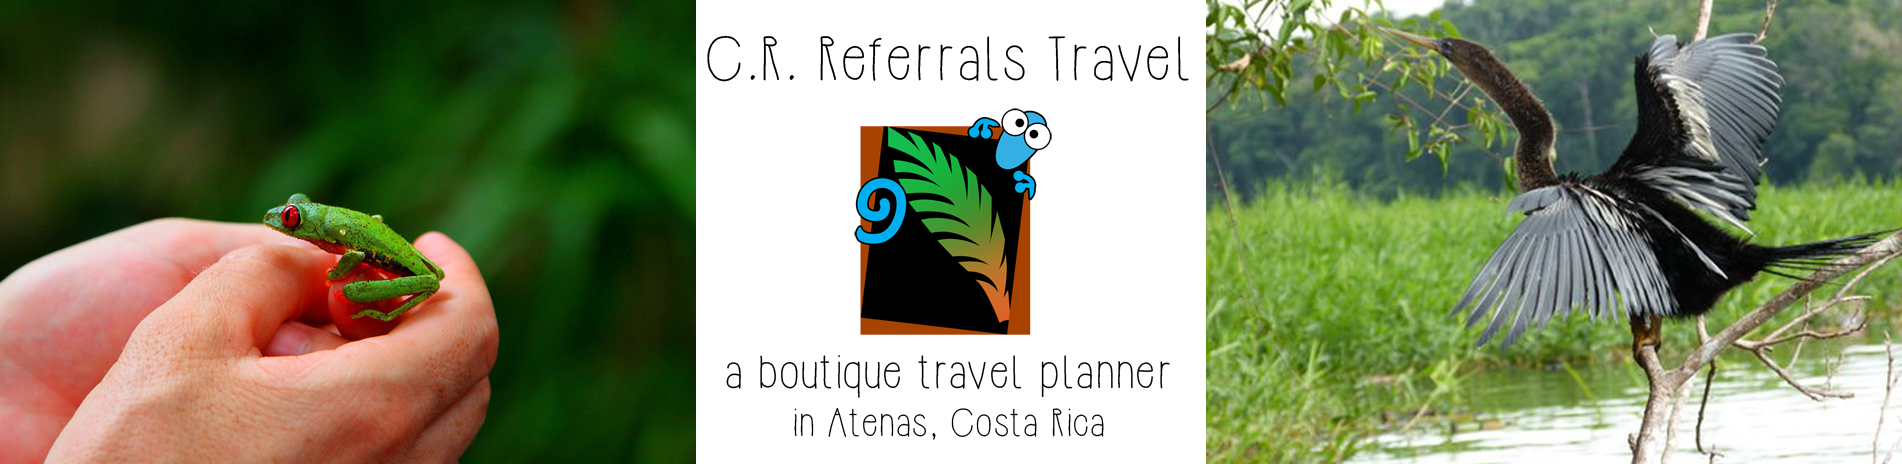 C.R. Referrals Travel - Atenas Costa Rica